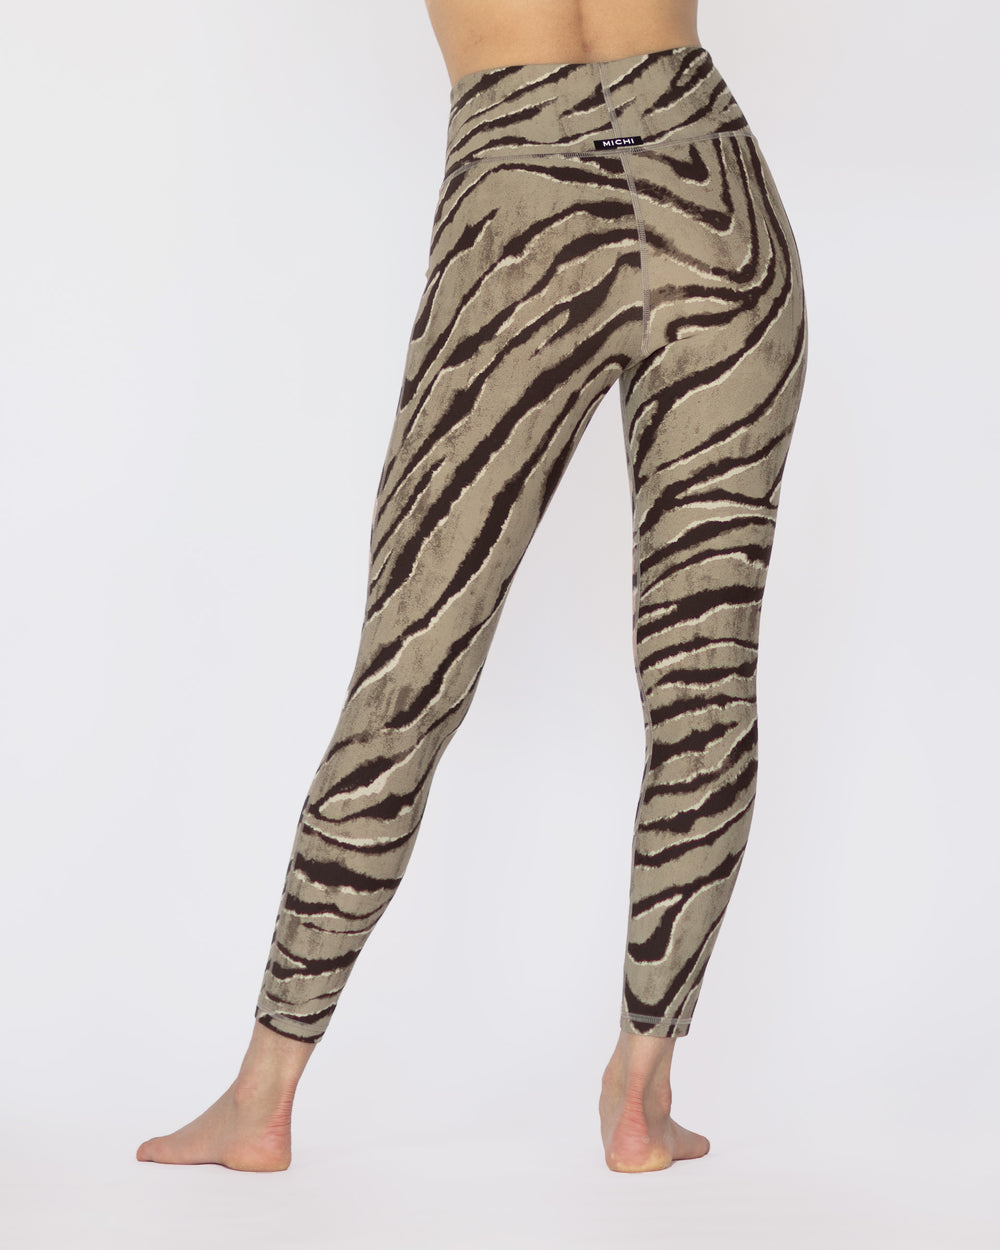 Shop the MICHI Instinct Tiger Print Legging | Women's Designer Activewear